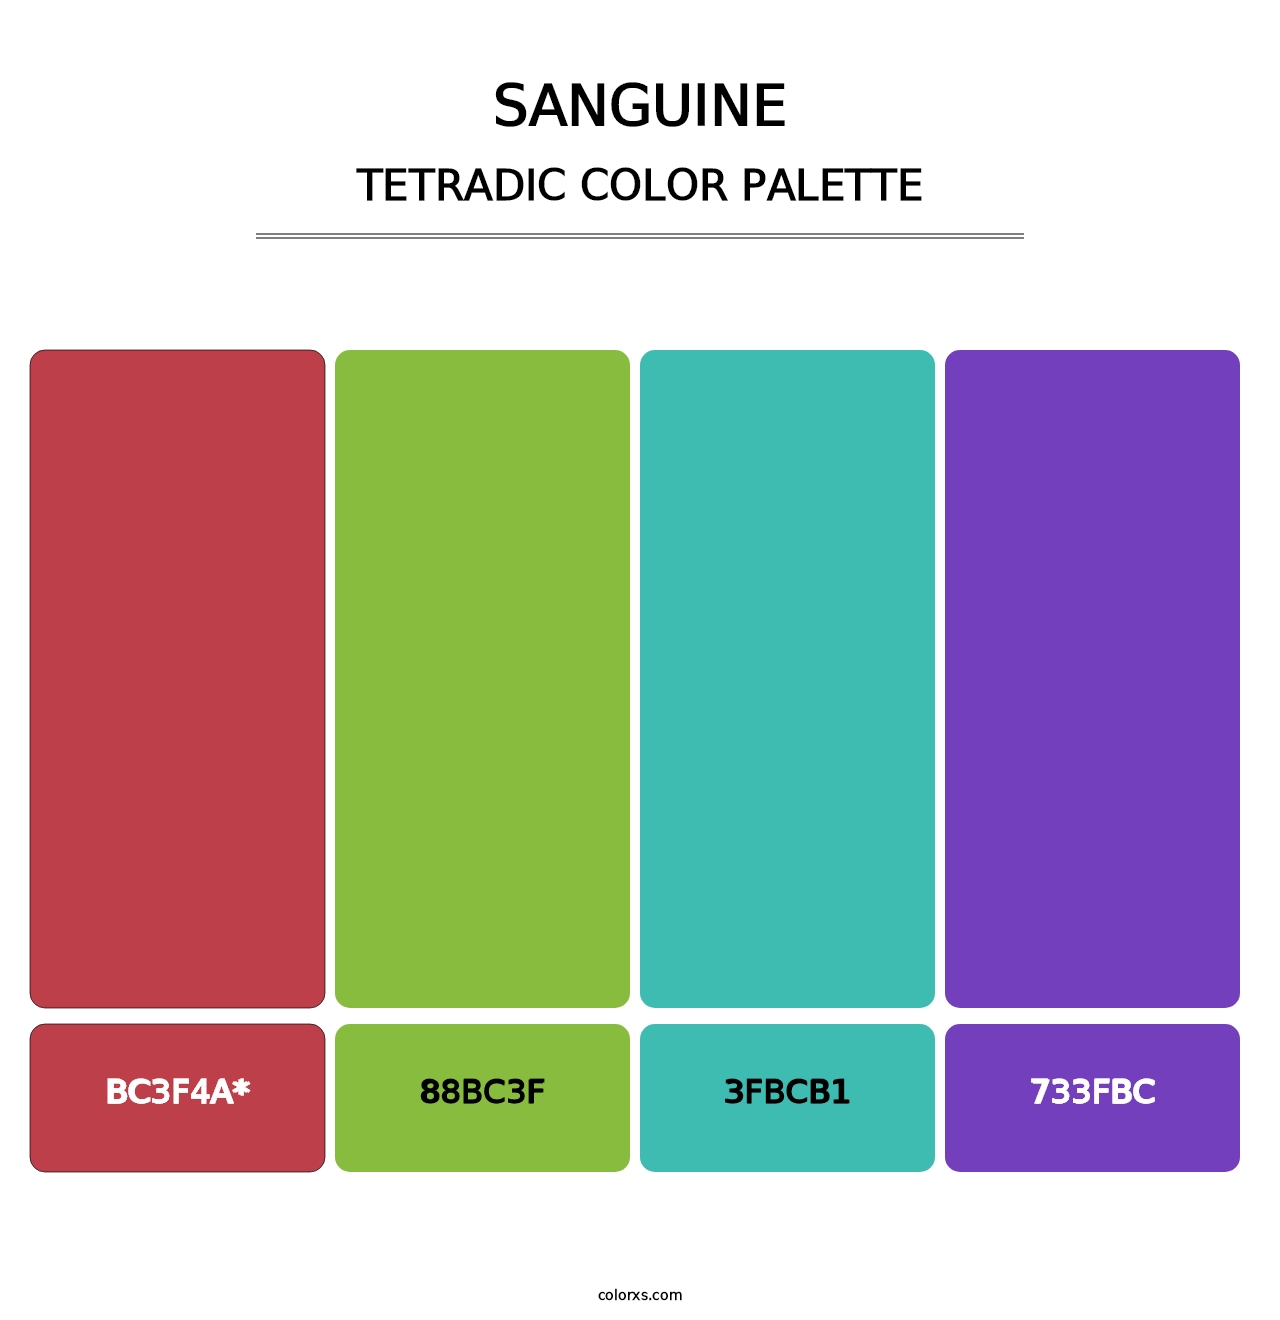 Sanguine - Tetradic Color Palette